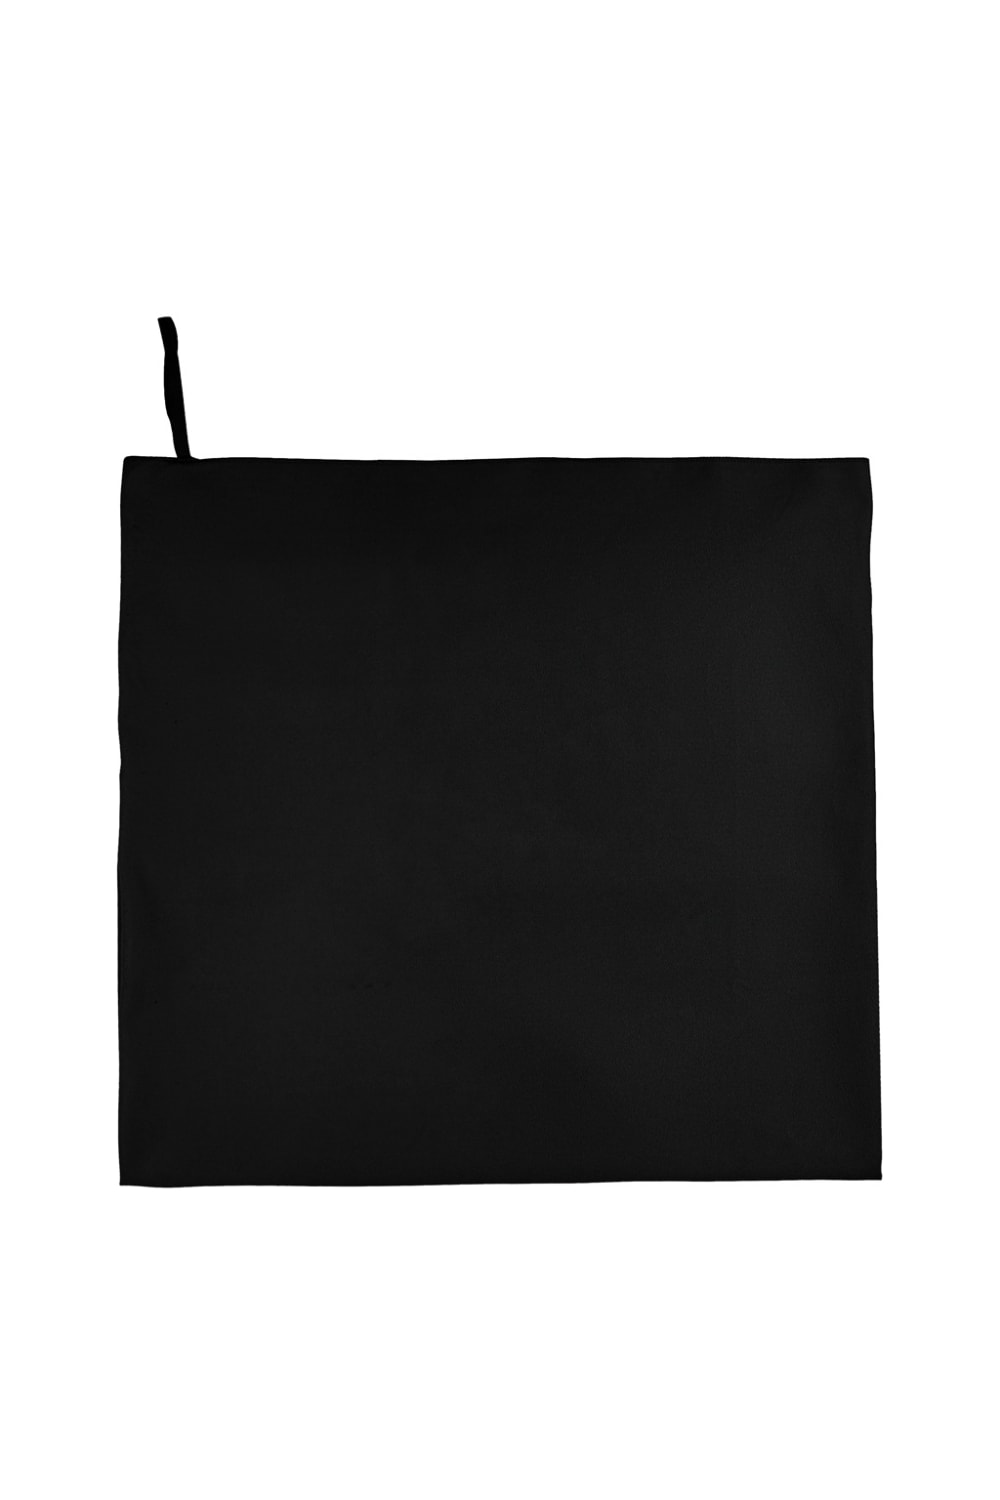 SOLS Atoll 100 Microfiber Bath Sheet (Black) (One Size)